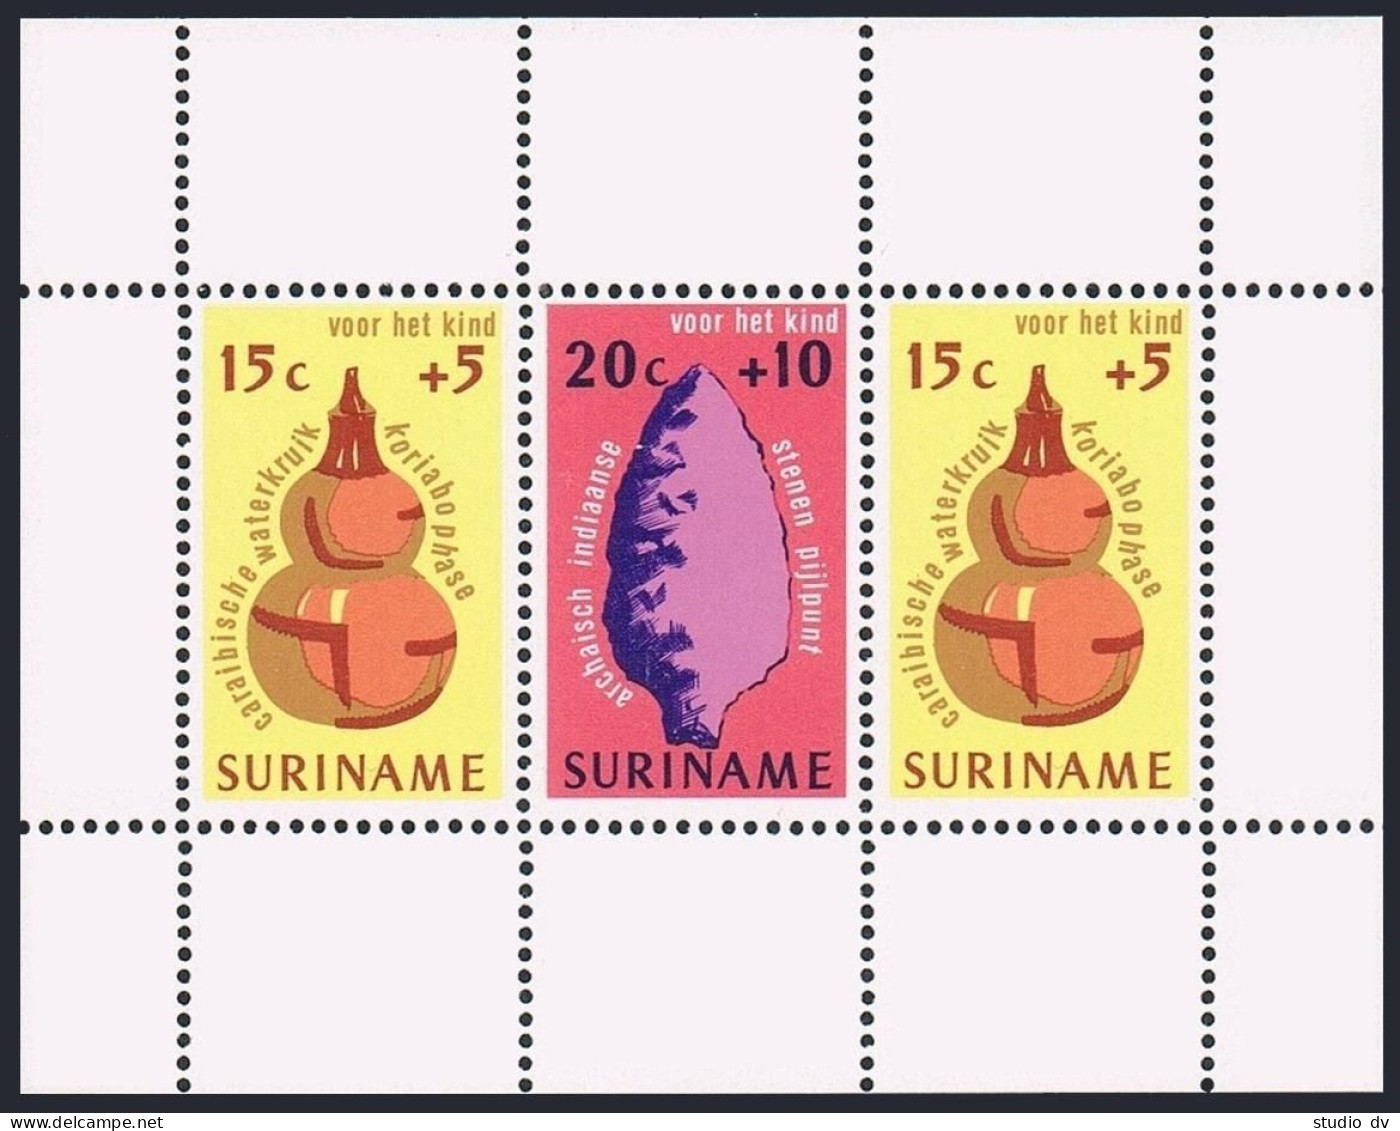 Surinam B222-B225, B223a, MNH. Mi 698-701,Bl.15. Indian Arrow Head,Wayana, 1975. - Surinam